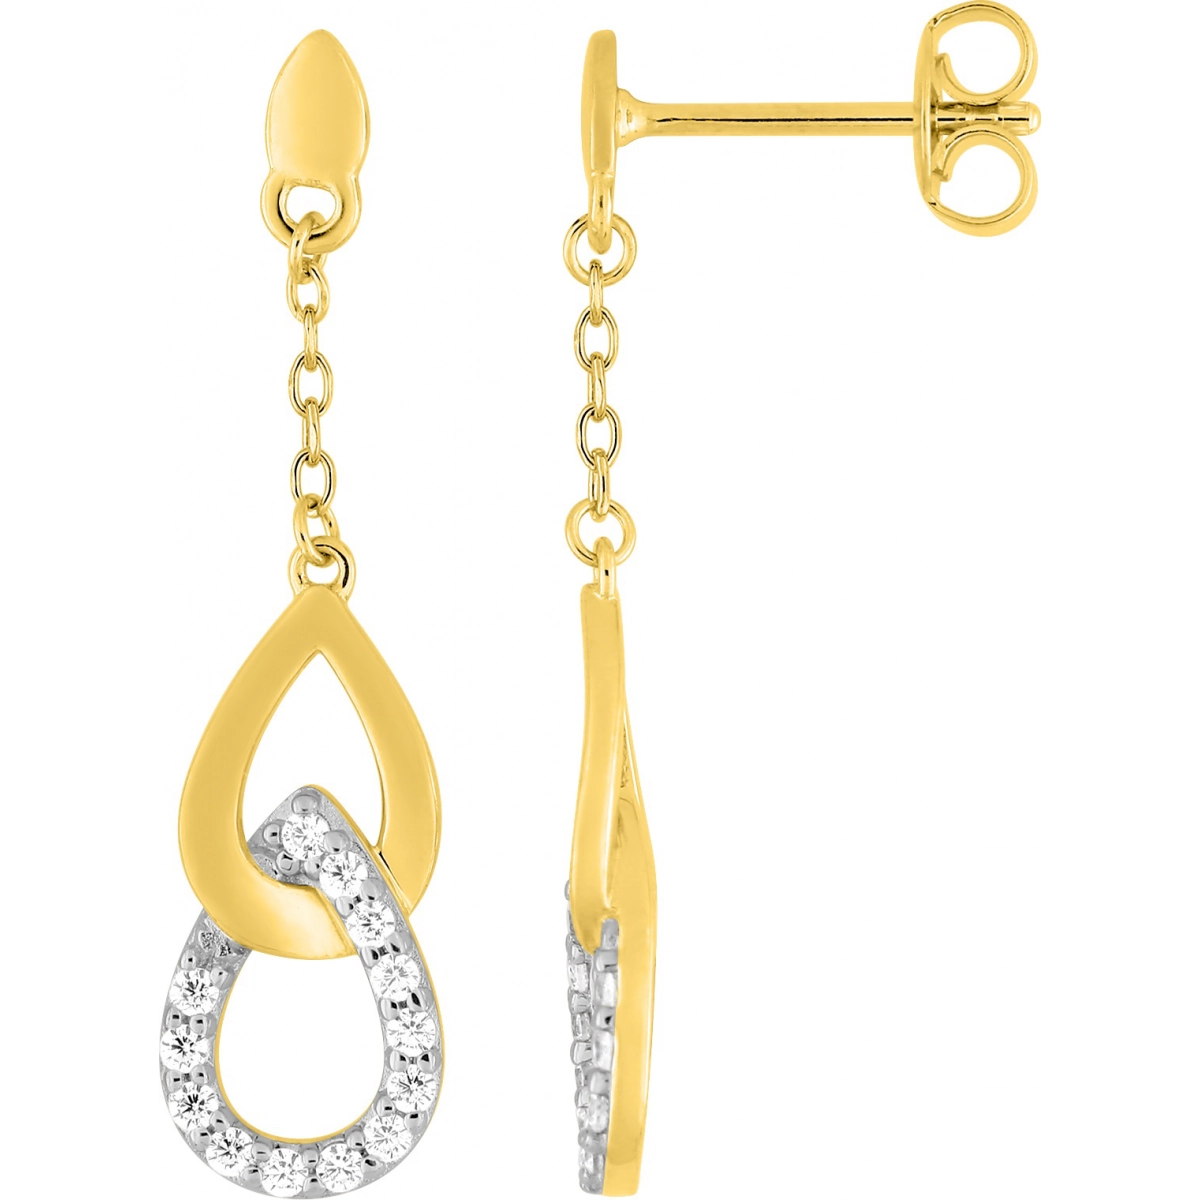 Earrings pair w. cz gold plated Brass Lua Blanca  CUZW63G 